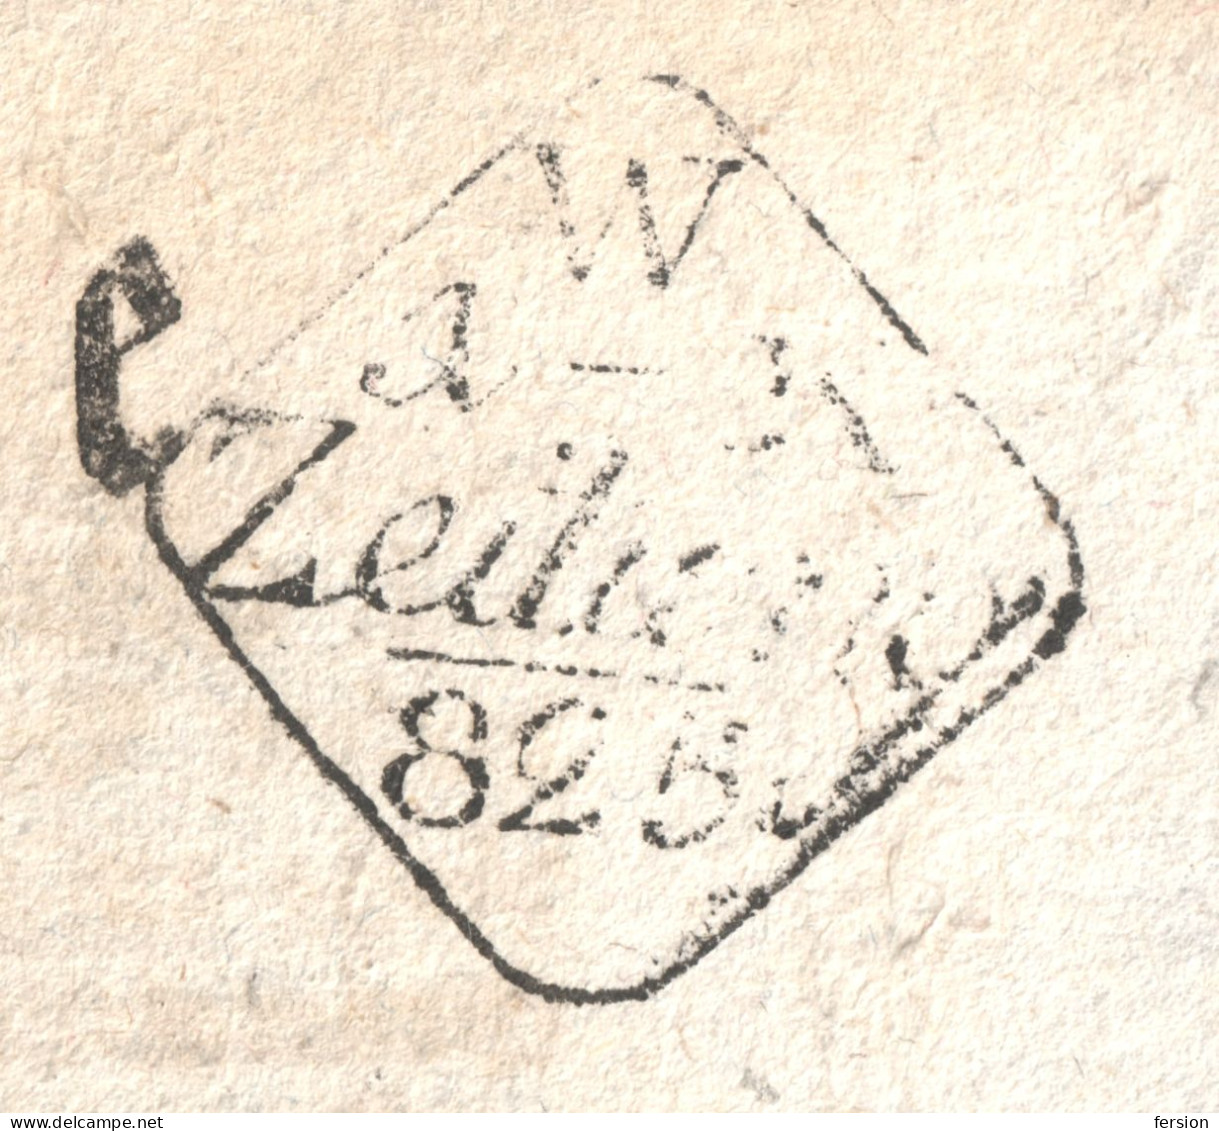 SIGNETTEN POSTMARK STAMP - Zeitungsstempel 1825 Austria - Revenue Tax Stamp - WIENER ZEITUNG Newspaper Signette - Fiscale Zegels